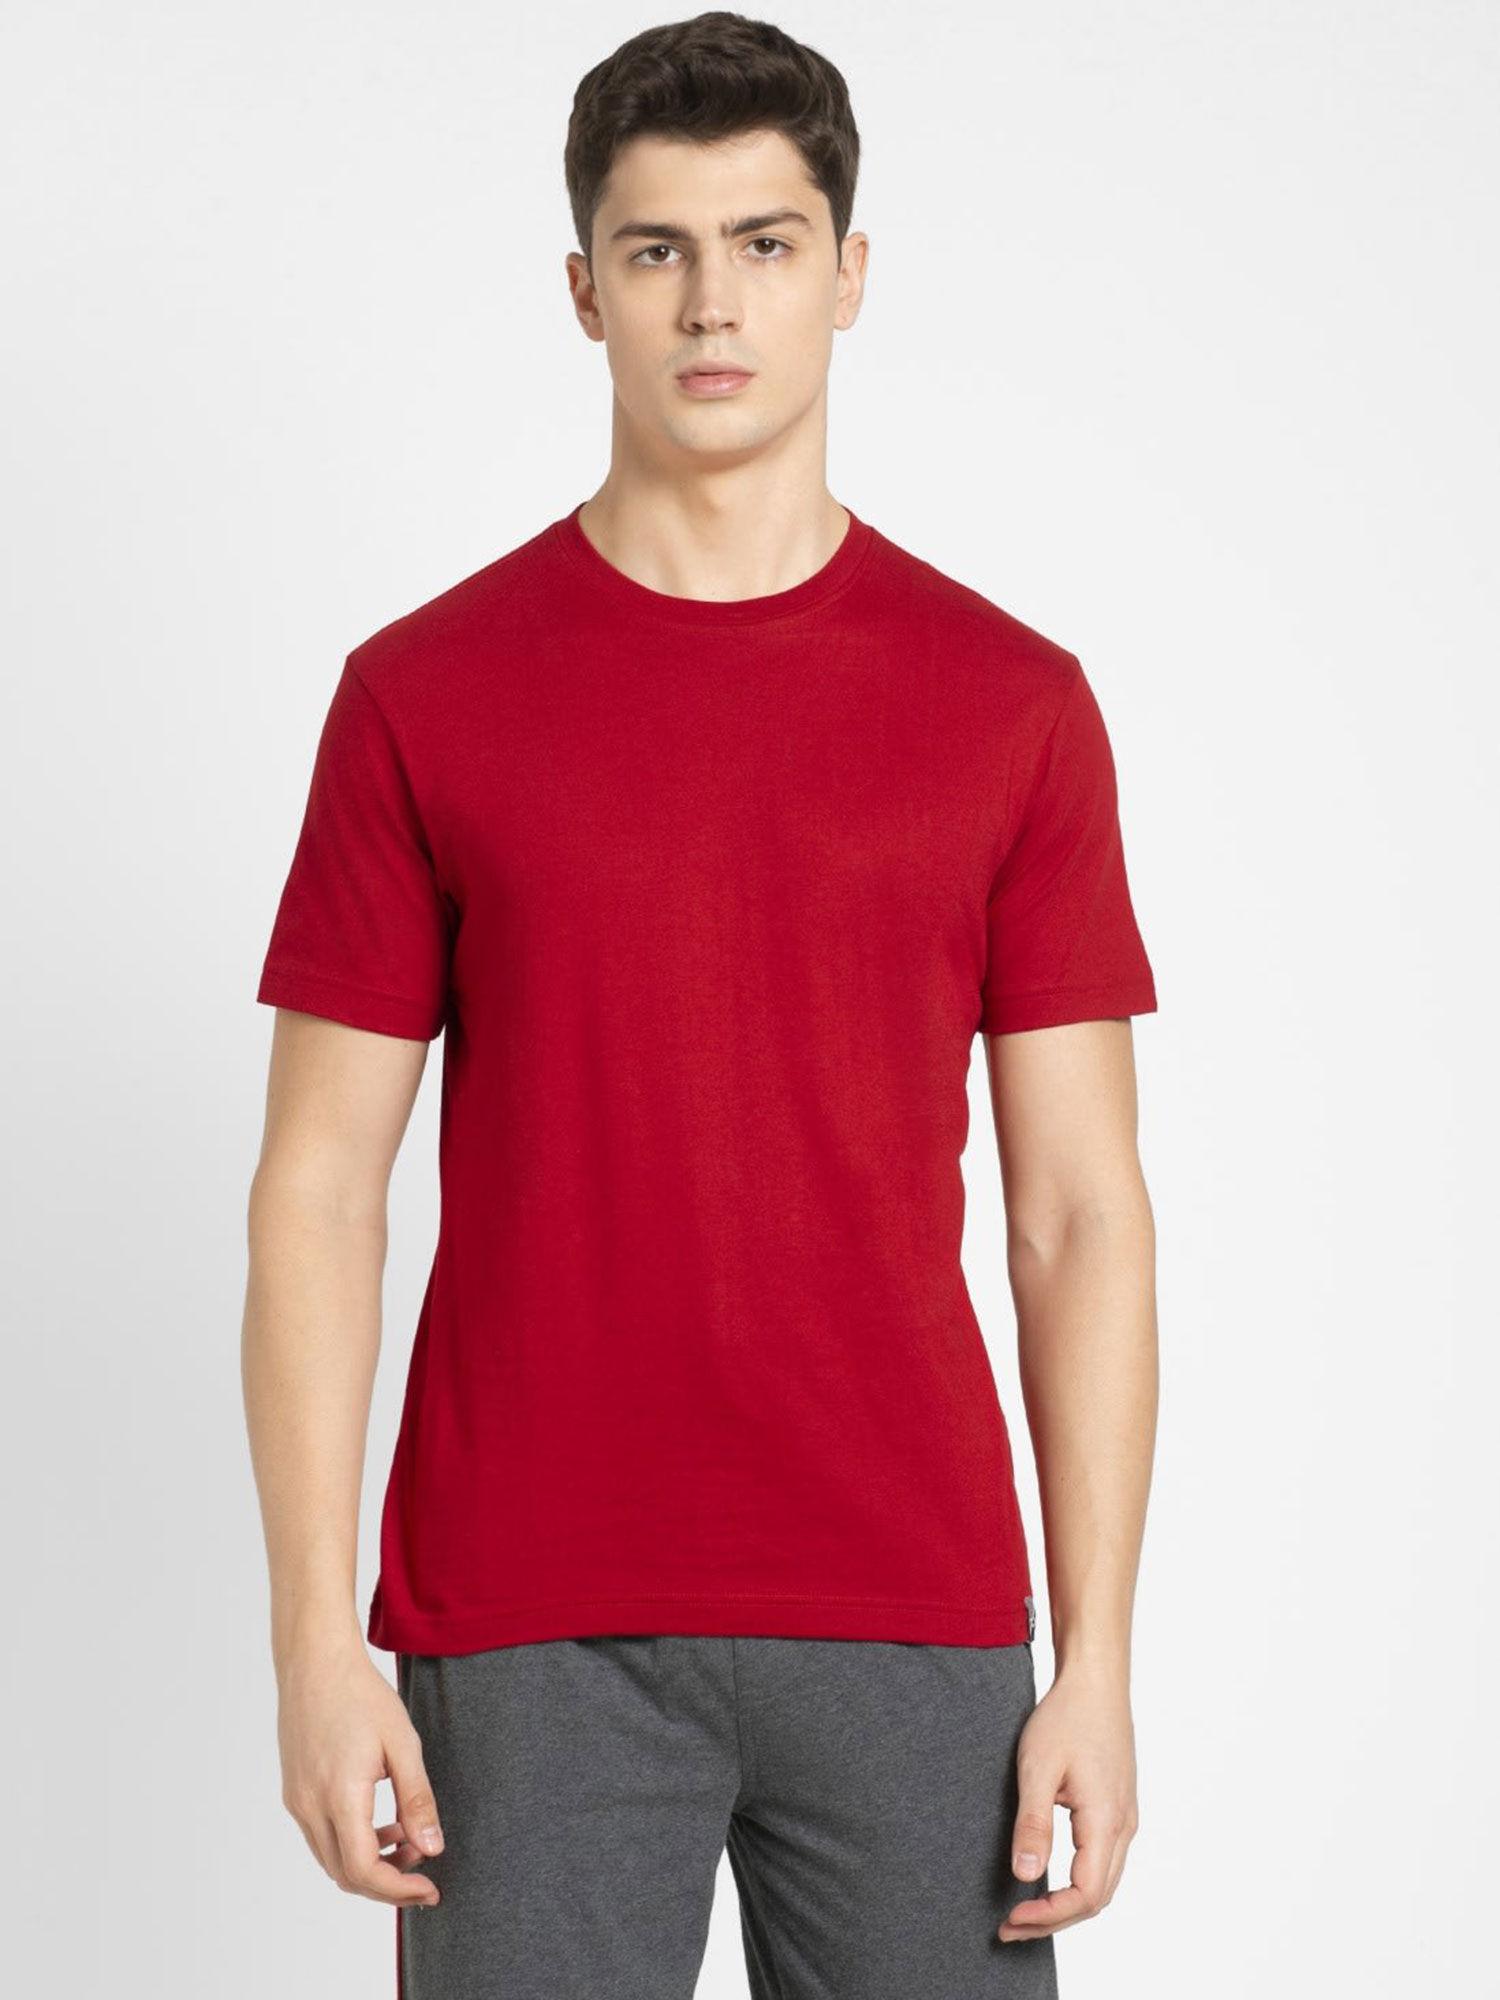 shanghai-red-sport-t-shirt